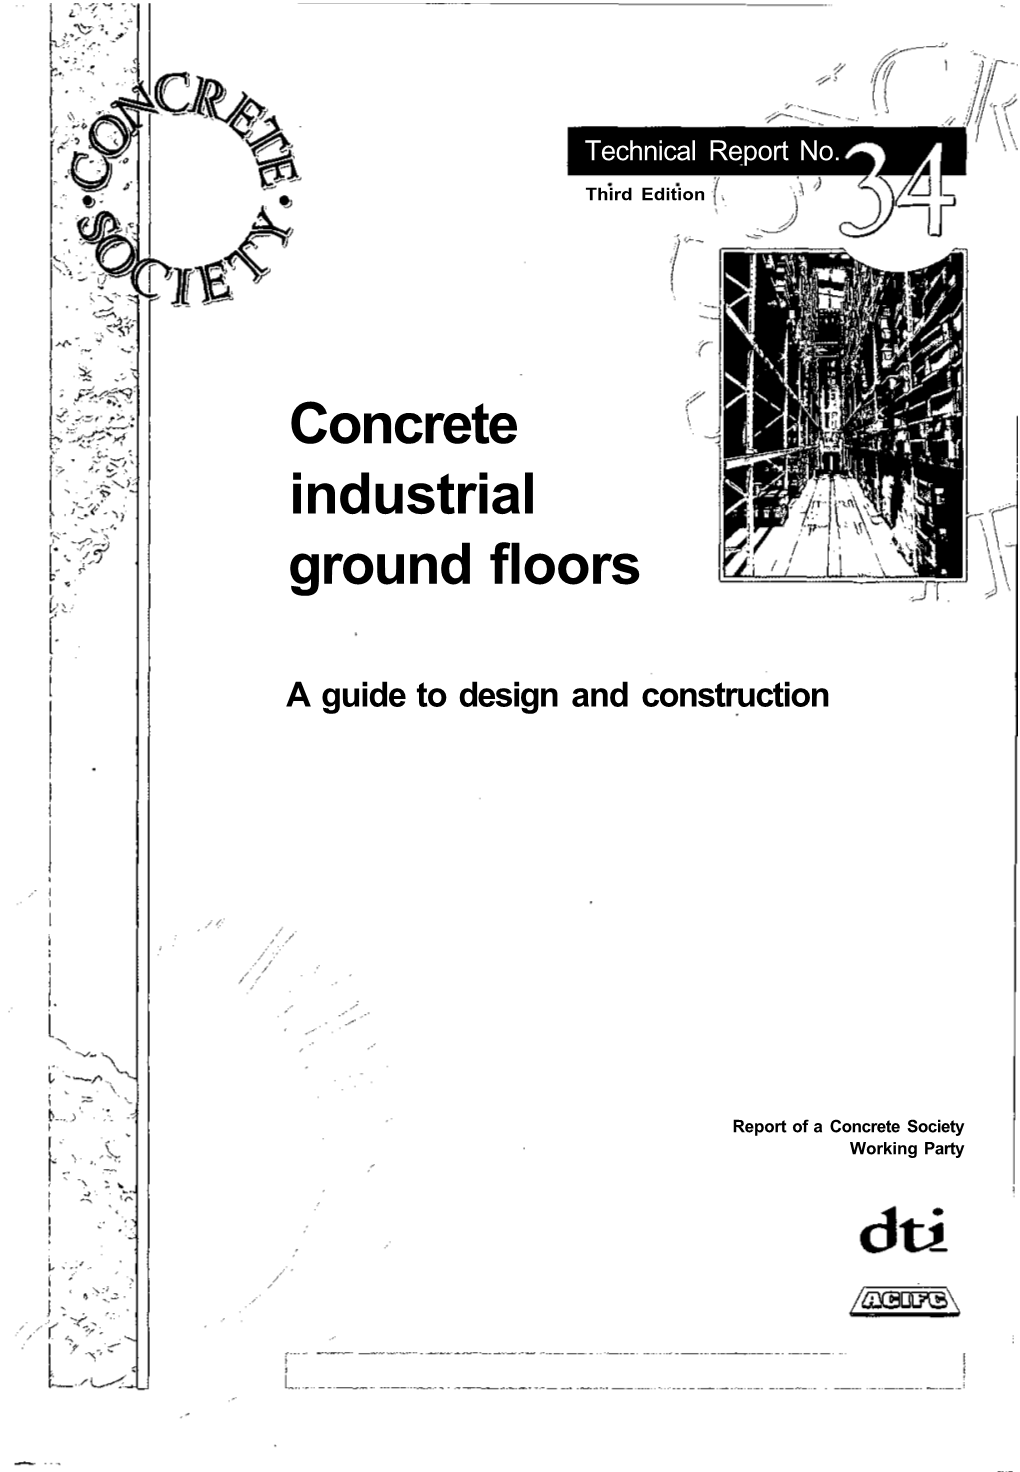 Concrete Industrial Ground Floors